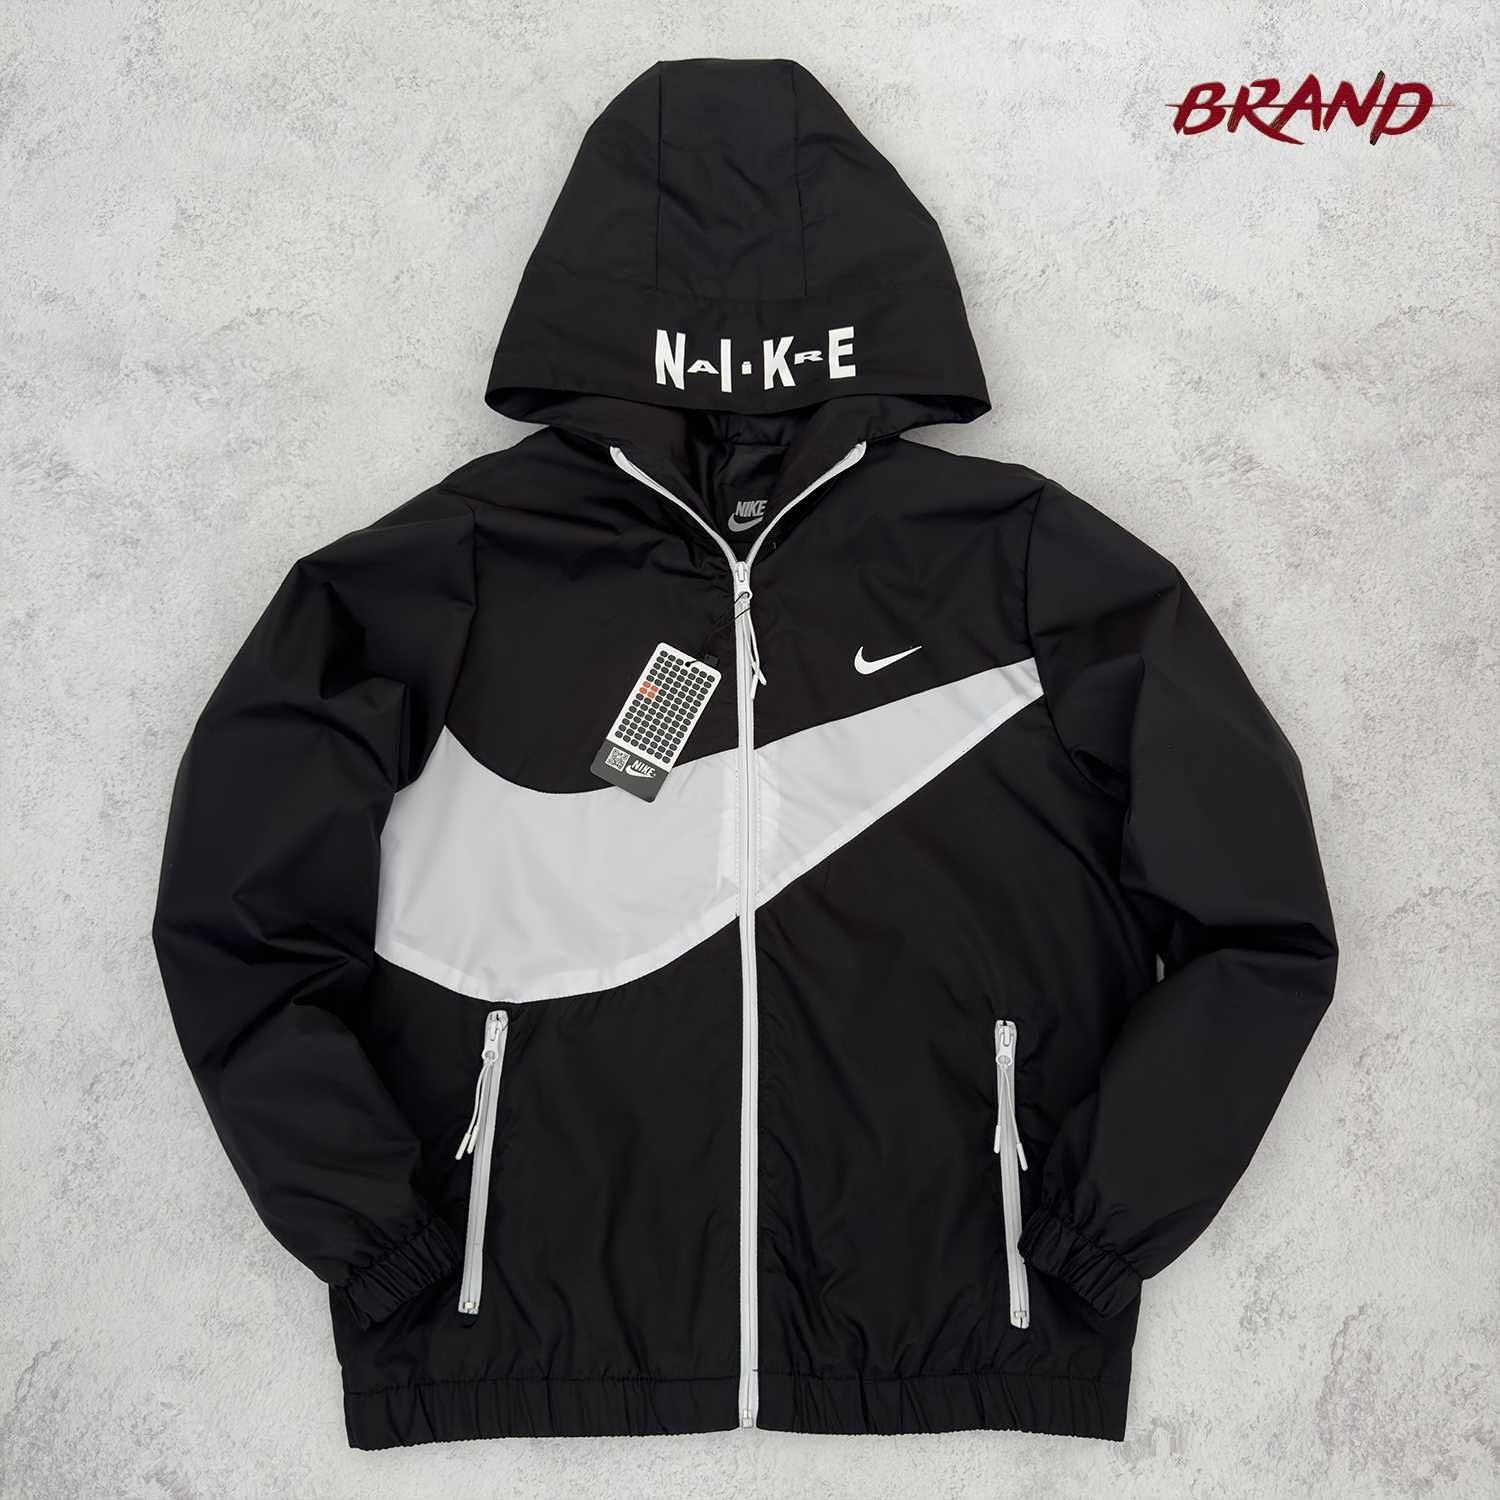 Ветровка Nike, Ветровка Найк, ветровка от Найк, куртка найк